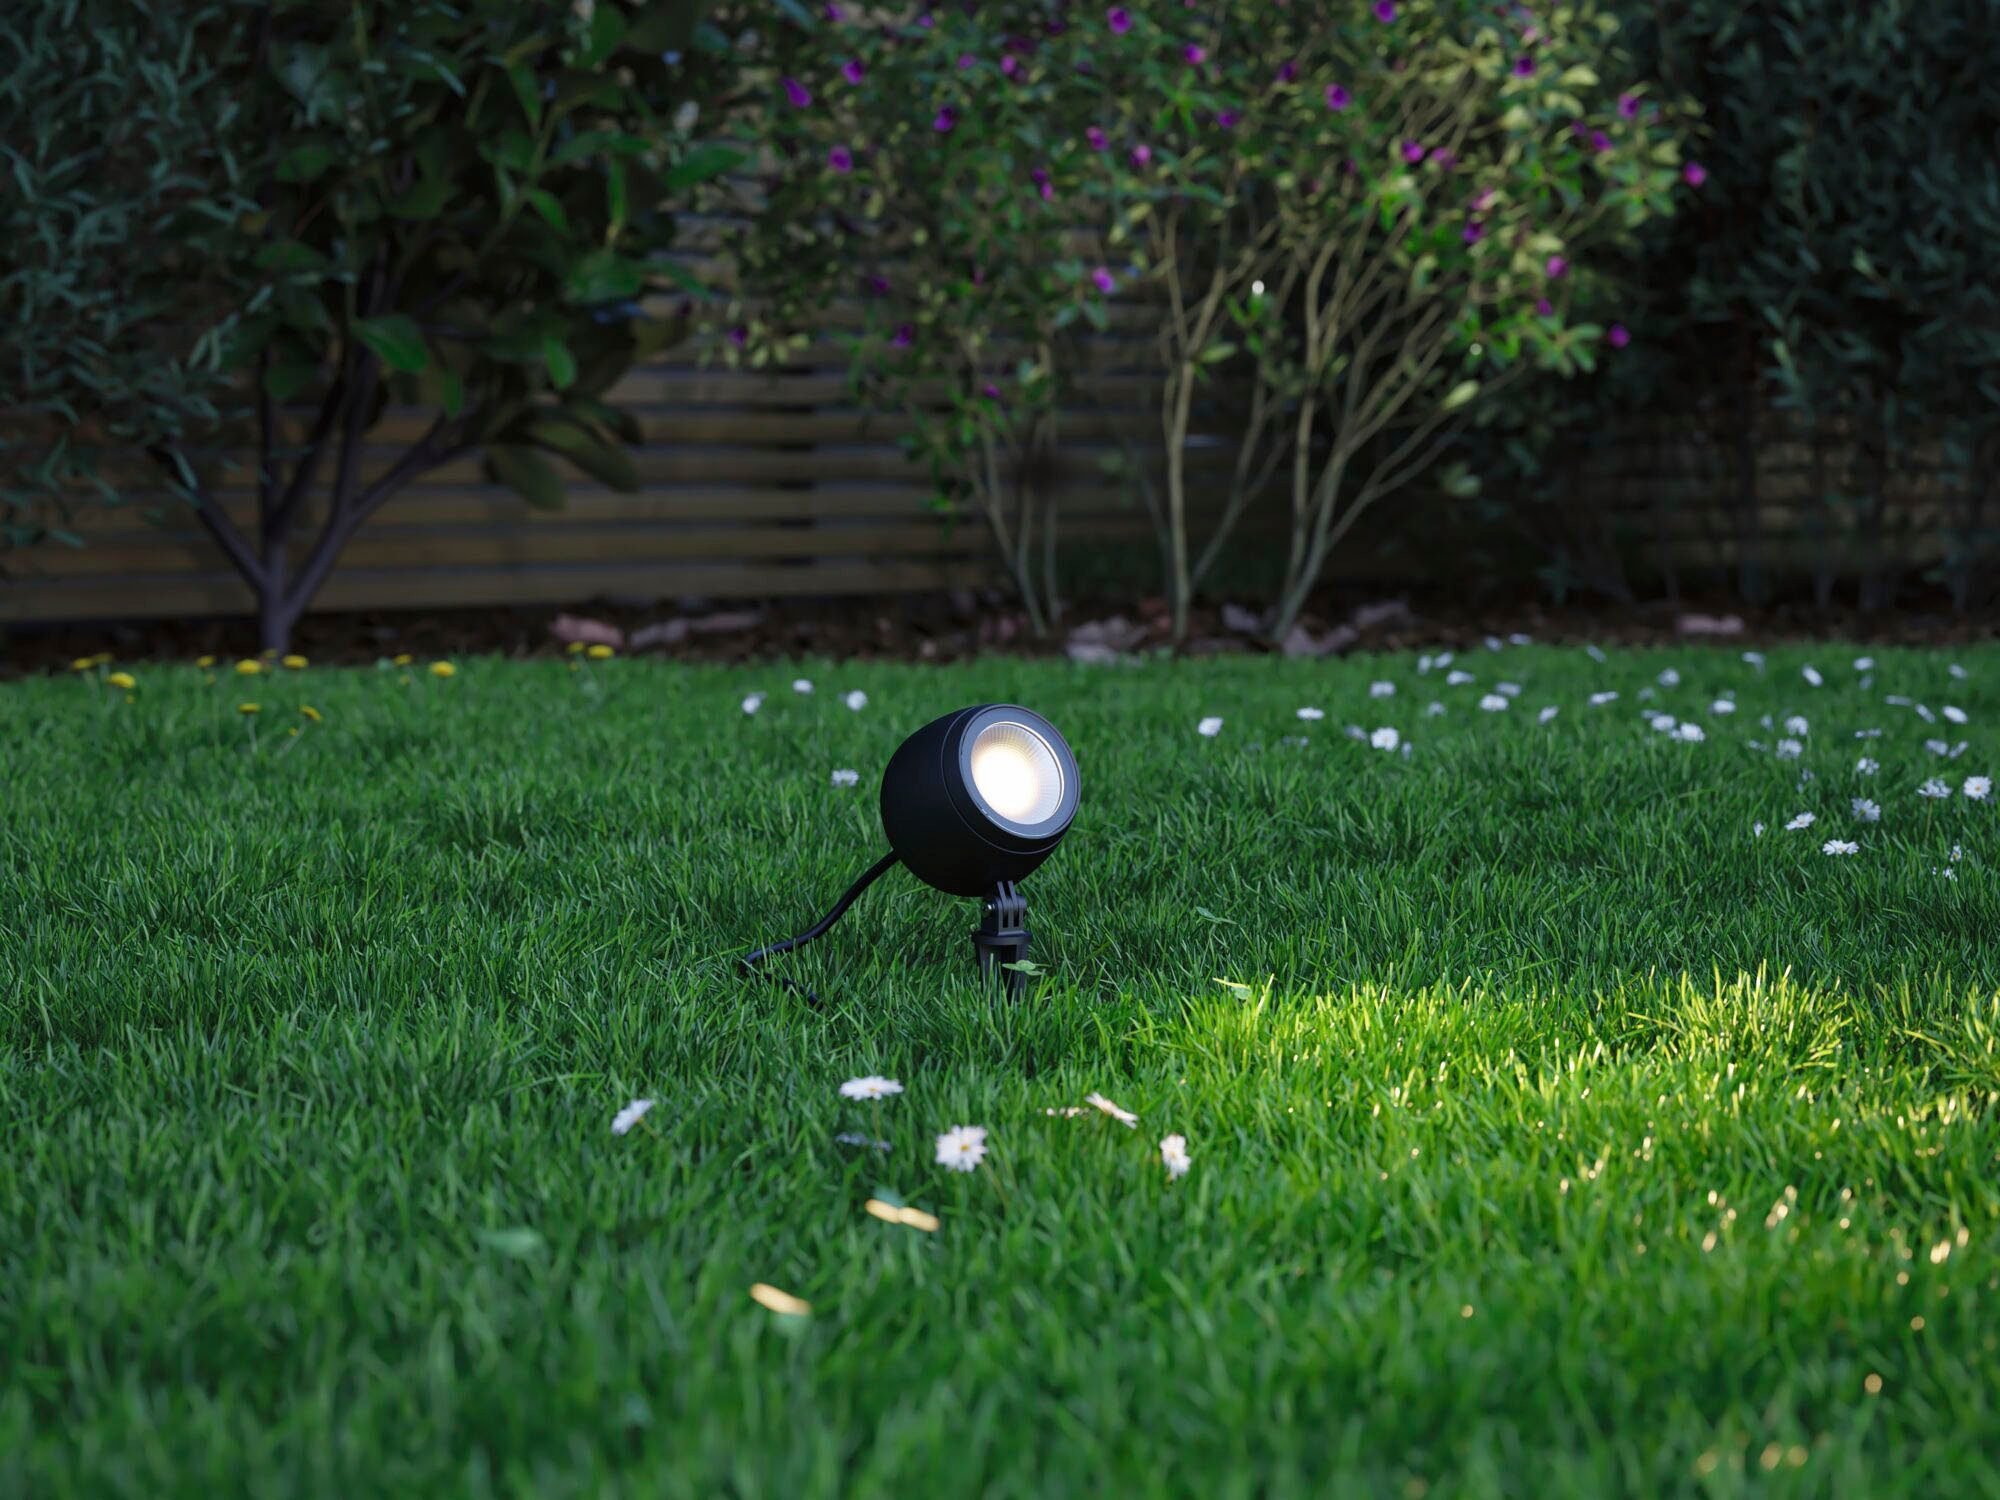 Paulmann LED Gartenleuchte Outdoor 230V friendly Gartenbeleuchtung Insektenfreundlich, LED Warmweiß, ZigBee, fest Erdspieß Pflanzen Kikolo mit setzt Insect in Spot integriert, Szene